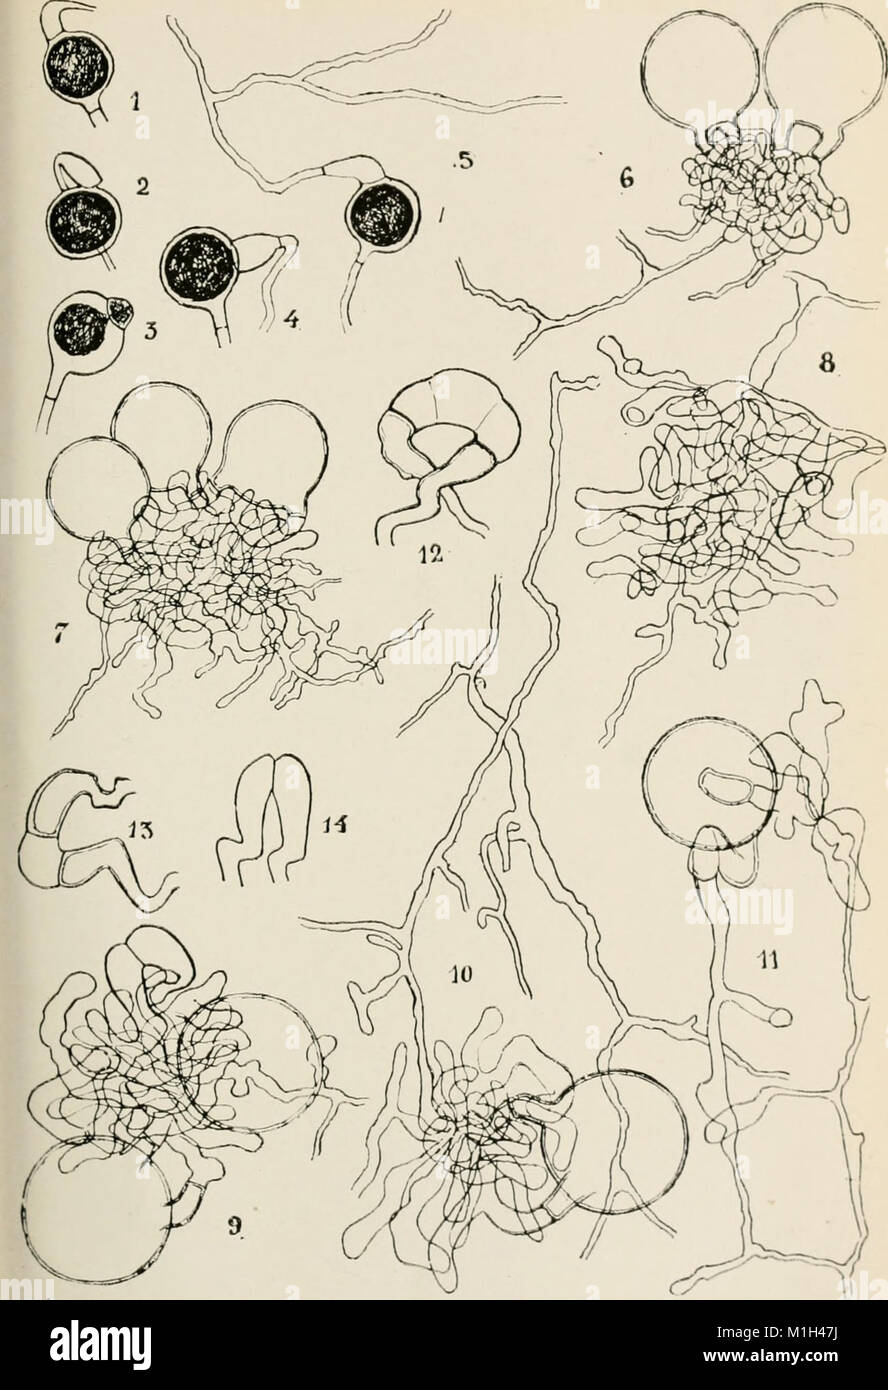 Annales de la Socit belge de microscopie (1875-1907) (18177549686) Stock Photo